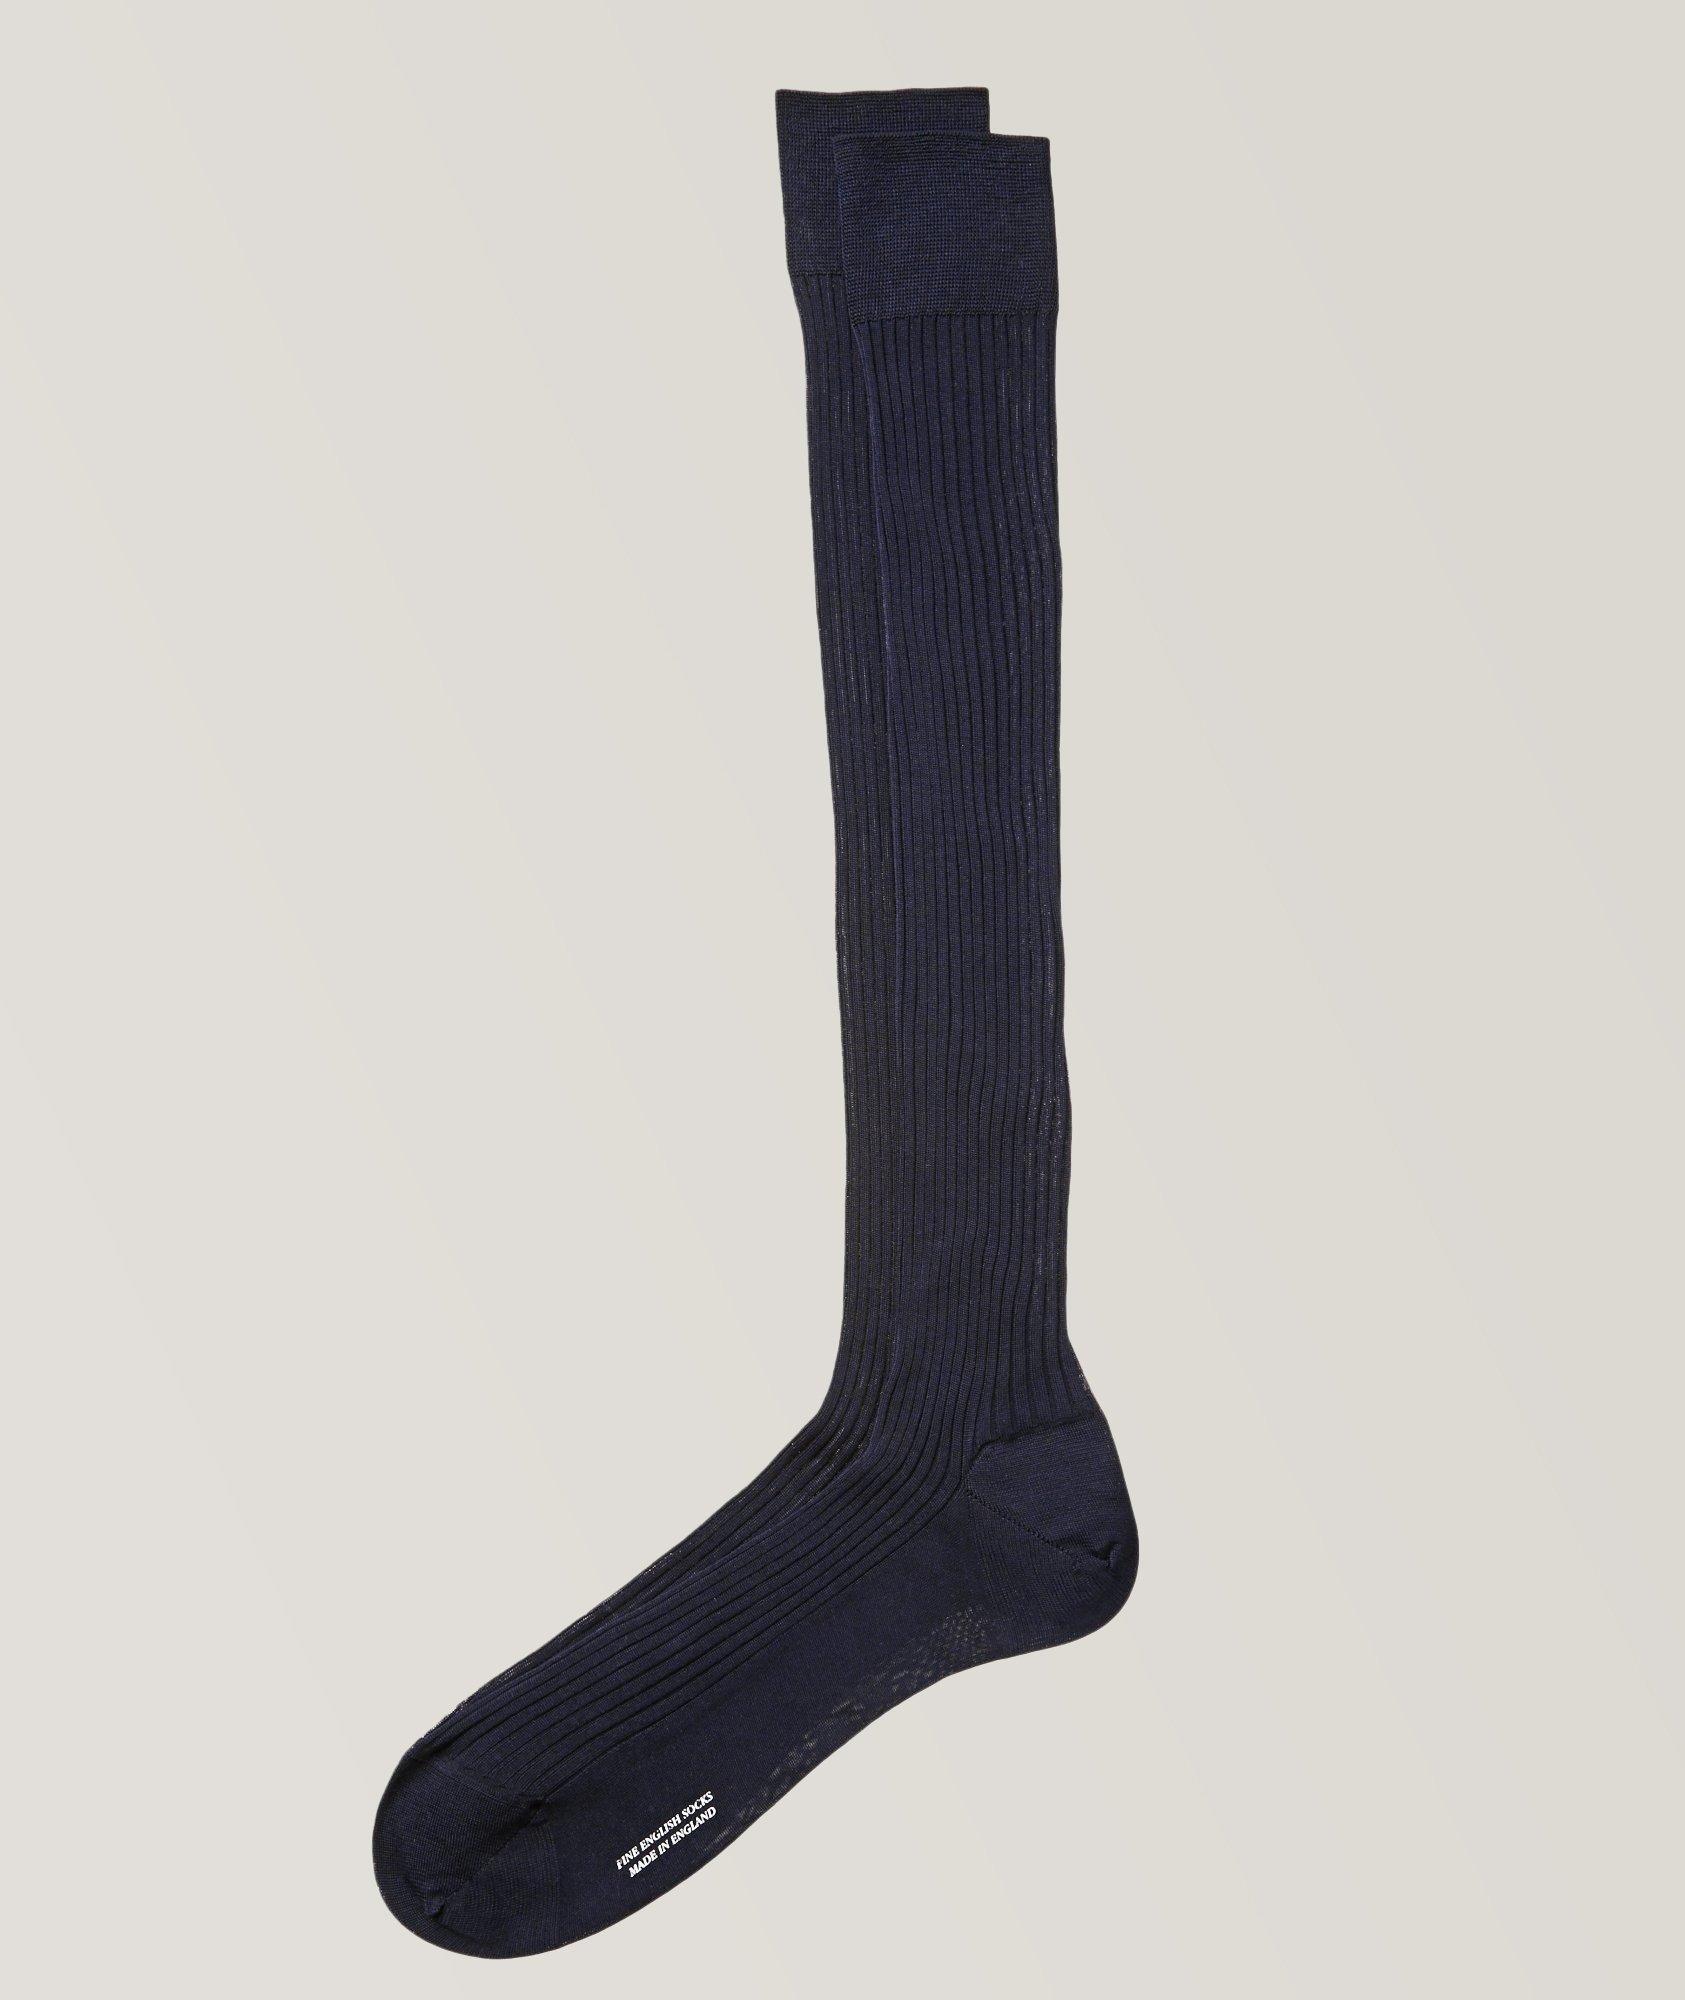 Ribbed Dress Socks image 0